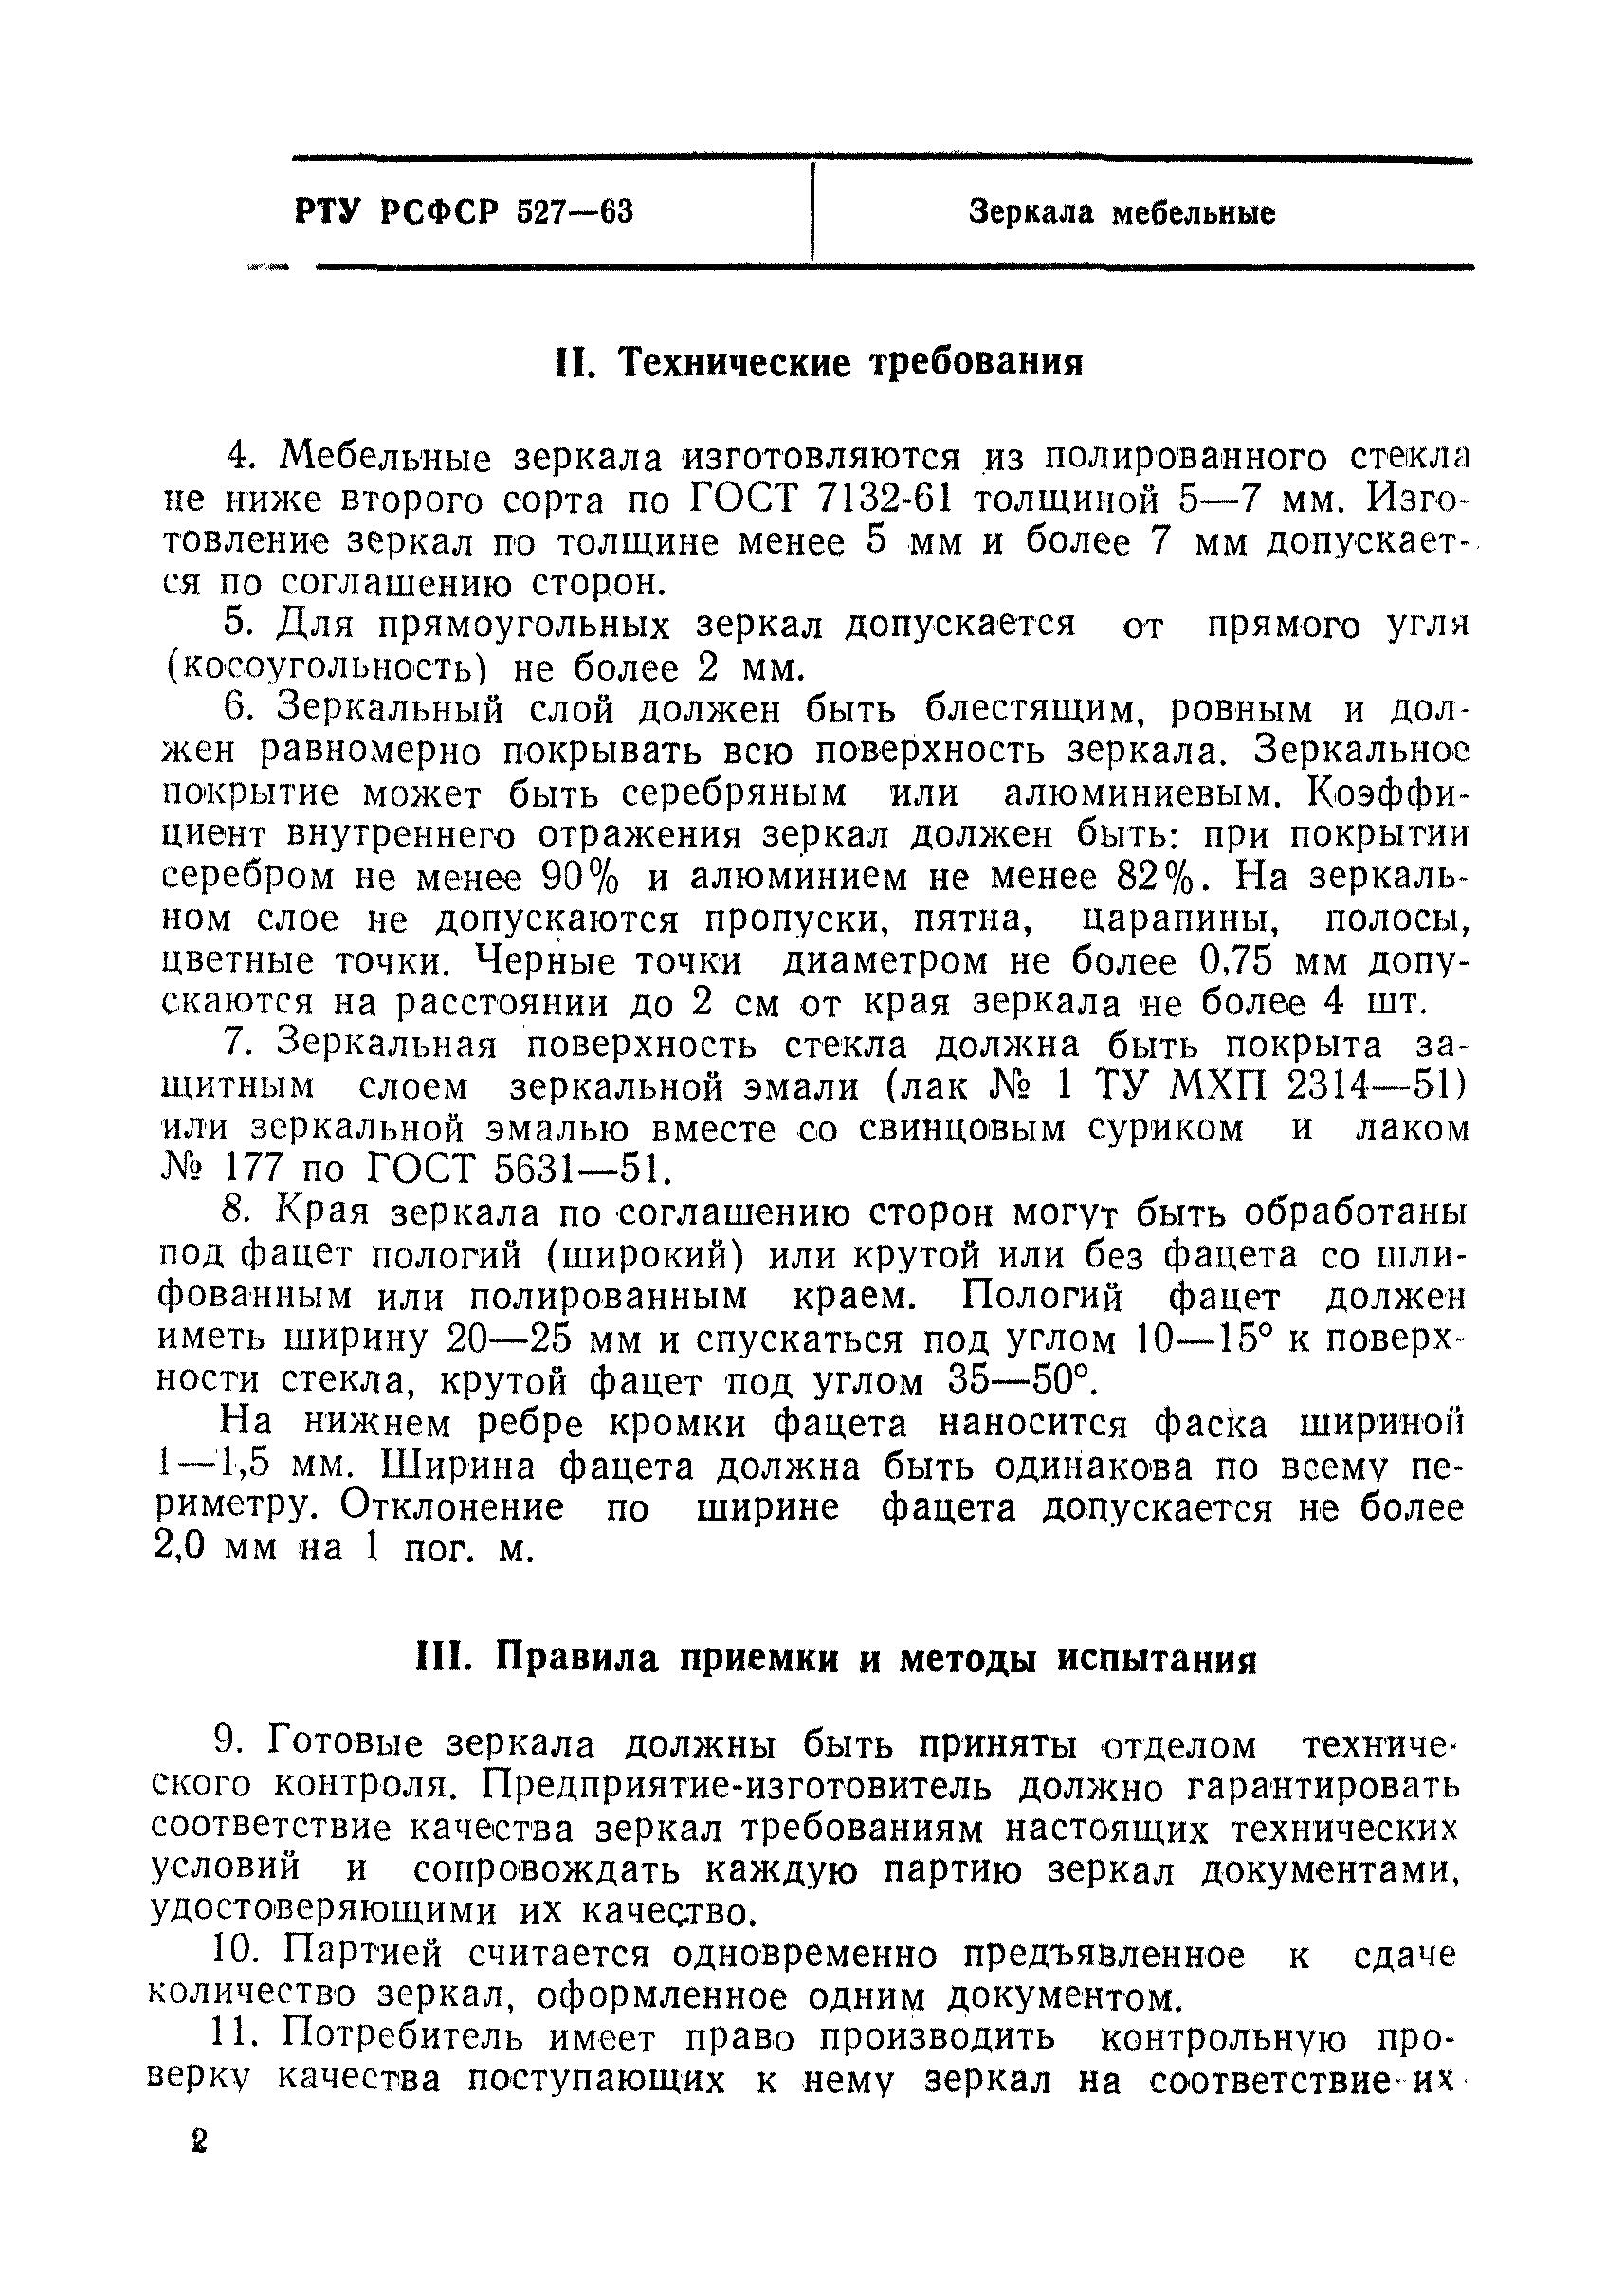 РТУ РСФСР 527-63